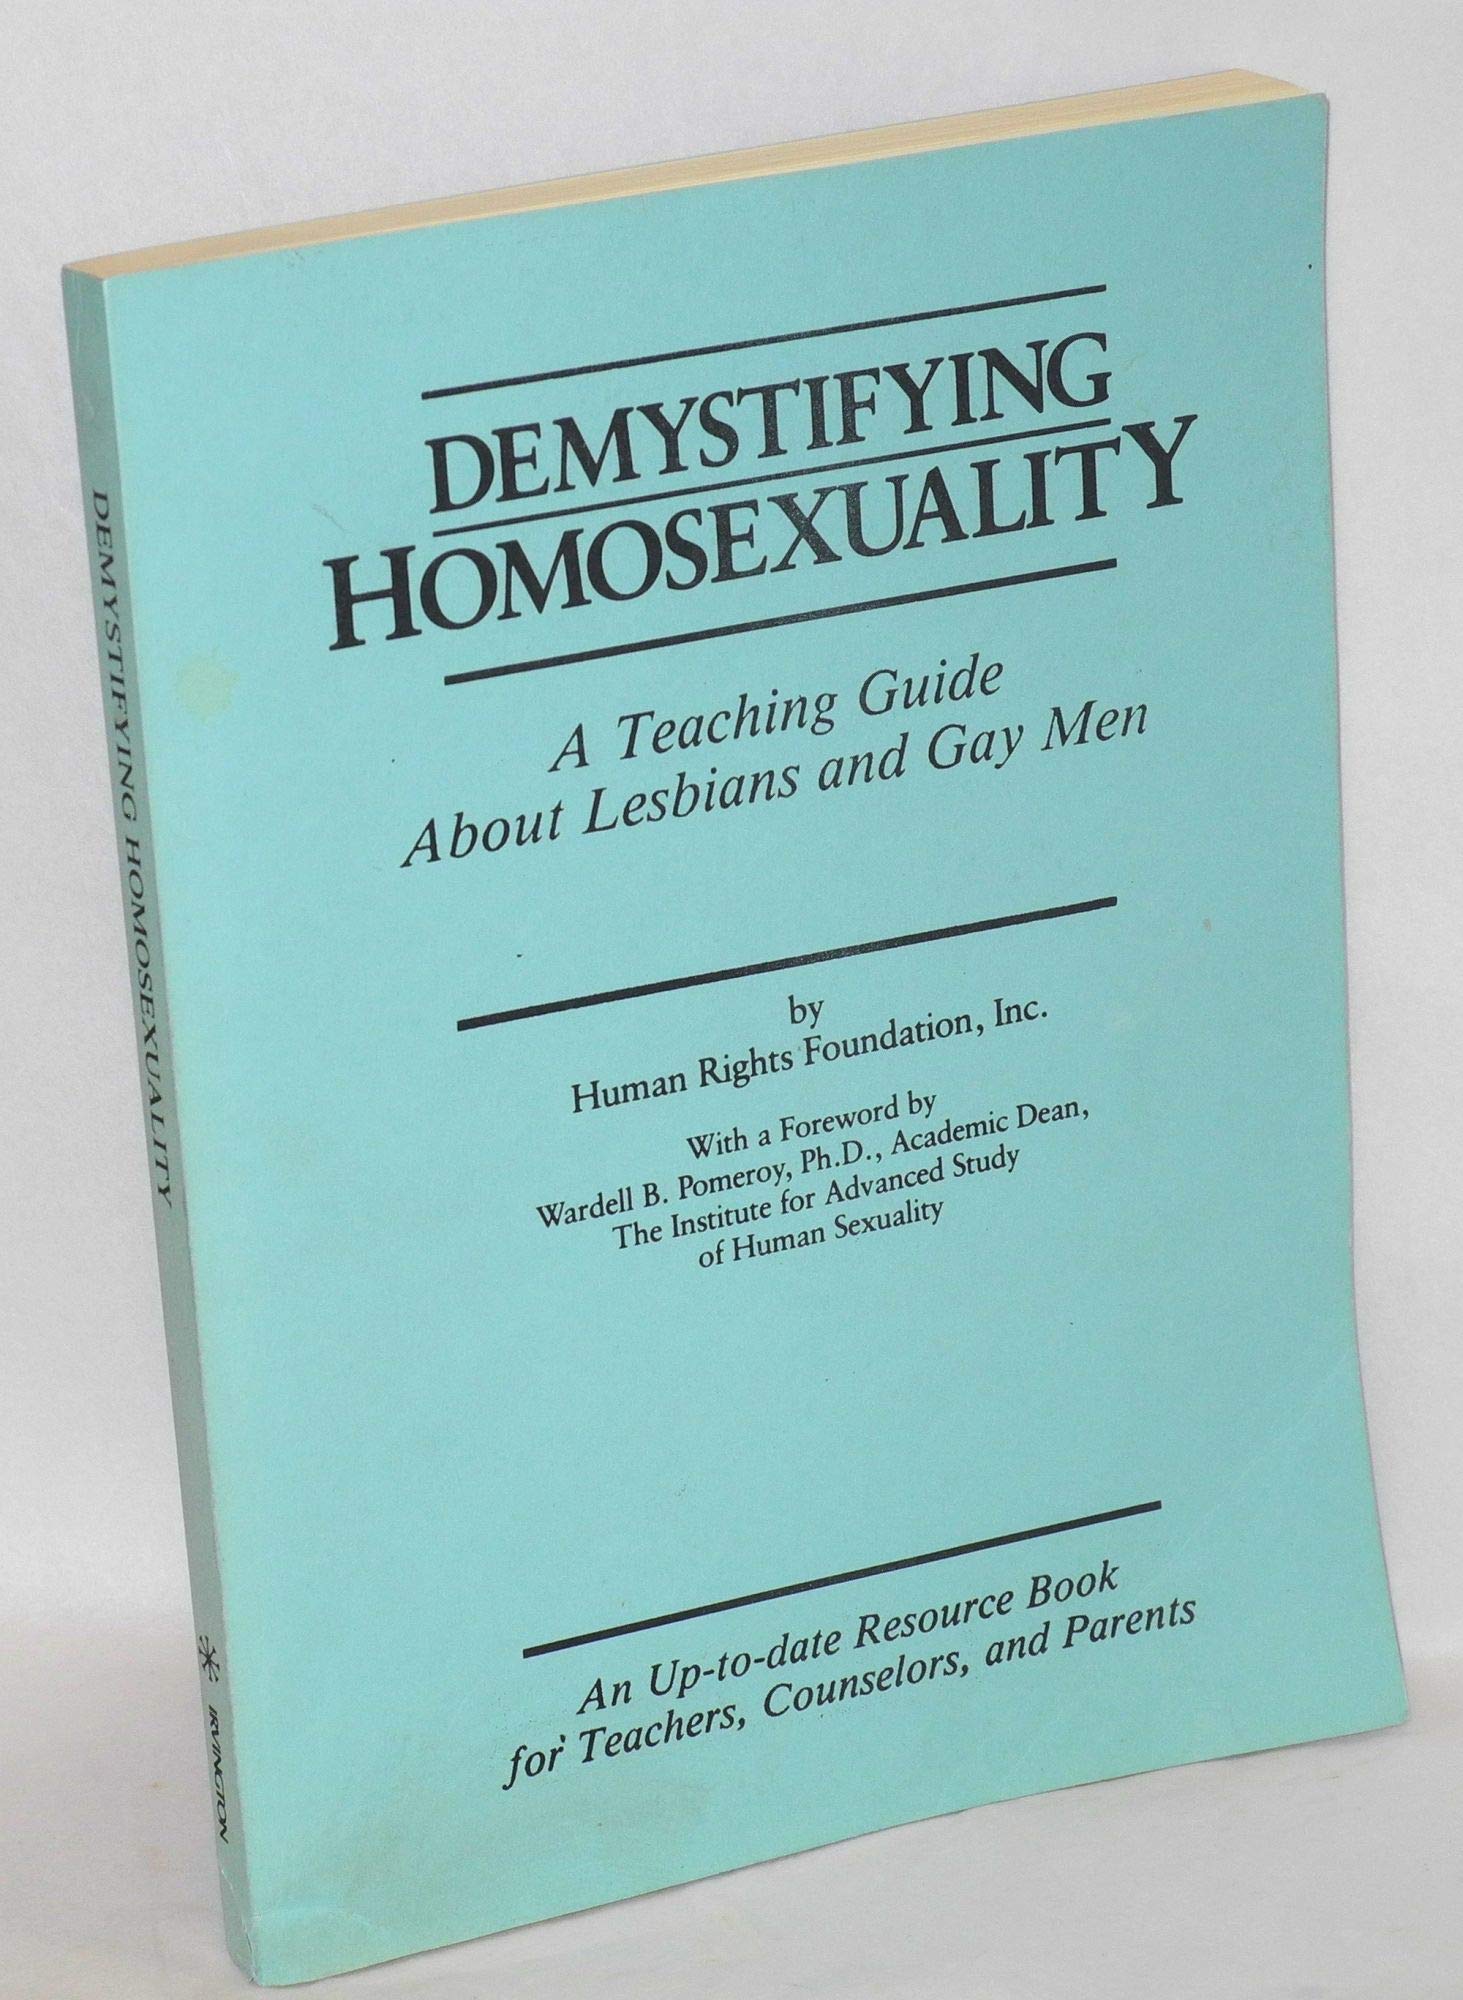 Demystifying homosexuality book written by Wardell B. Pomeroy]